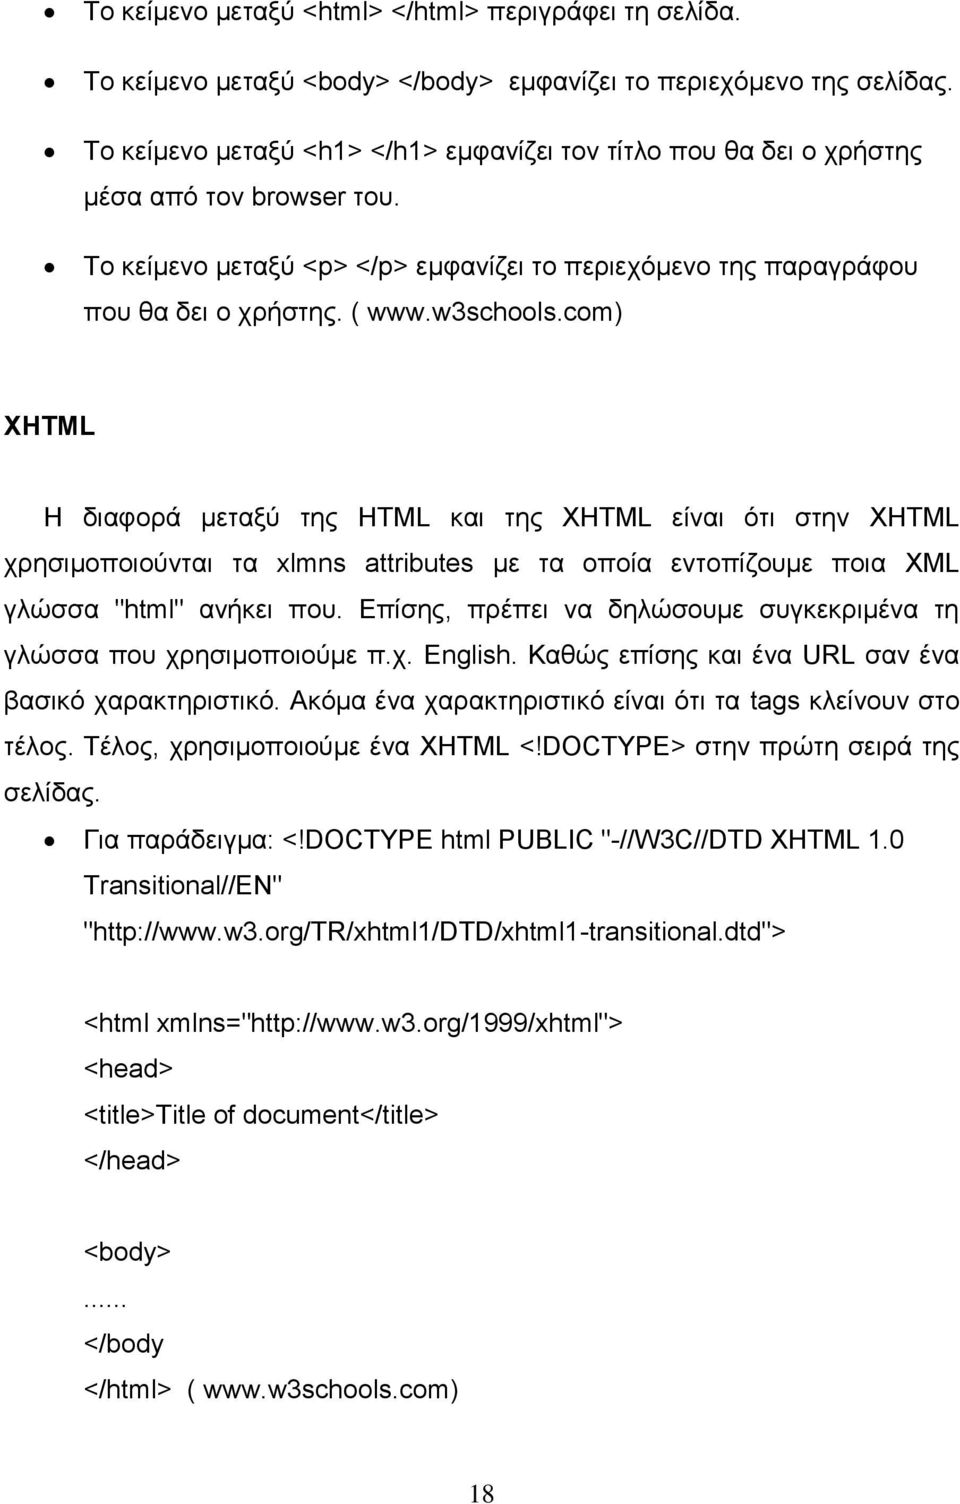 w3schools.com) XHTML Η δηαθνξά κεηαμύ ηεο HTML θαη ηεο XHTML είλαη όηη ζηελ XHTML ρξεζηκνπνηνύληαη ηα xlmns attributes κε ηα νπνία εληνπίδνπκε πνηα XML γιώζζα "html" αλήθεη πνπ.